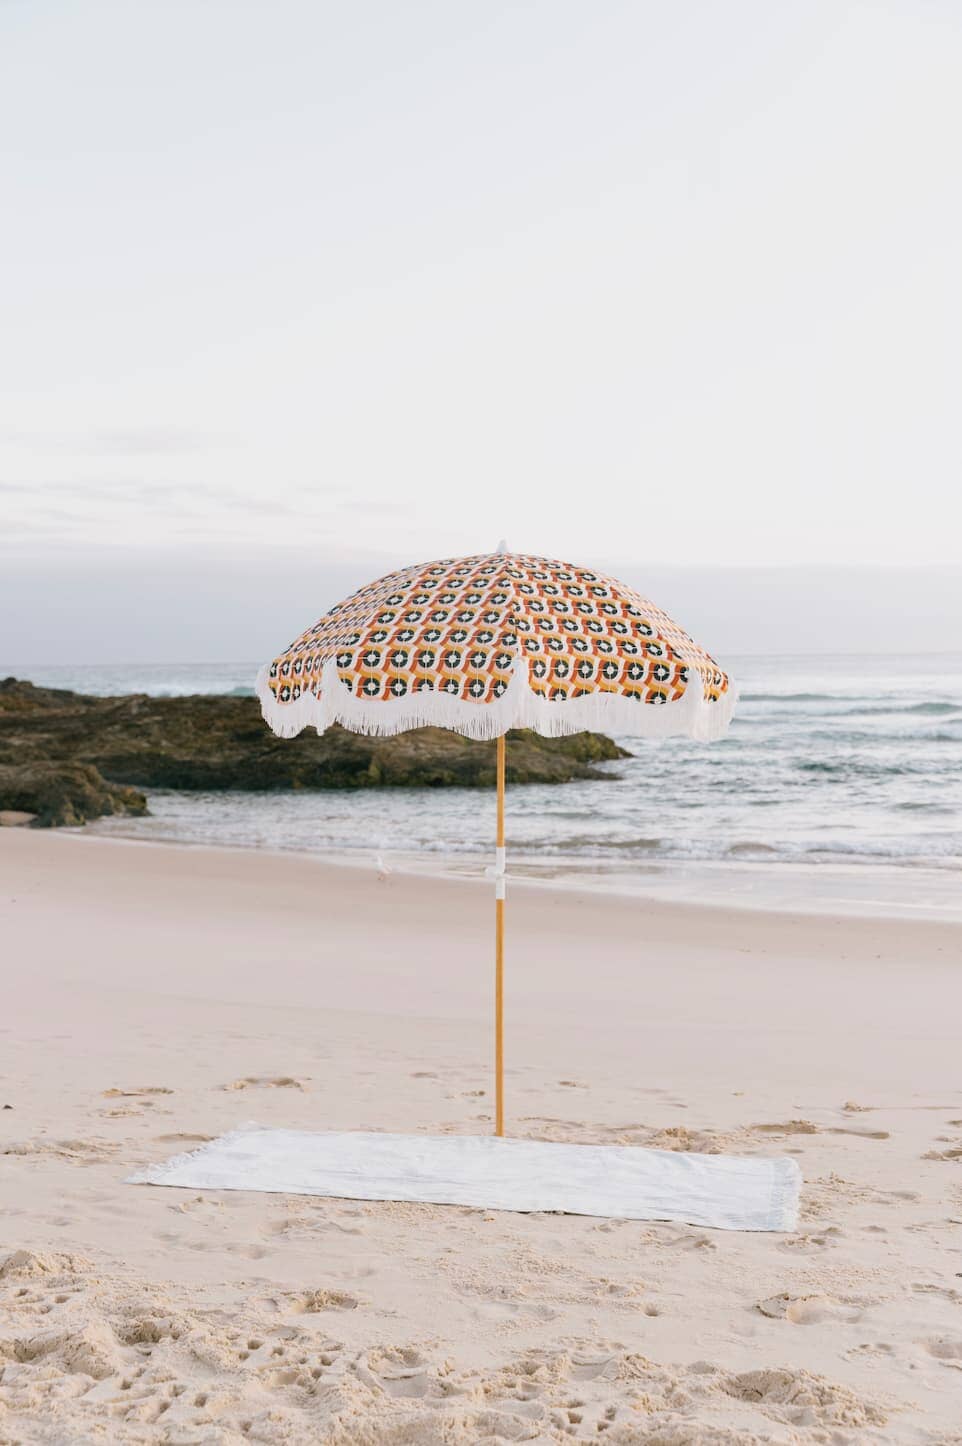 San christobel umbrella on the beach